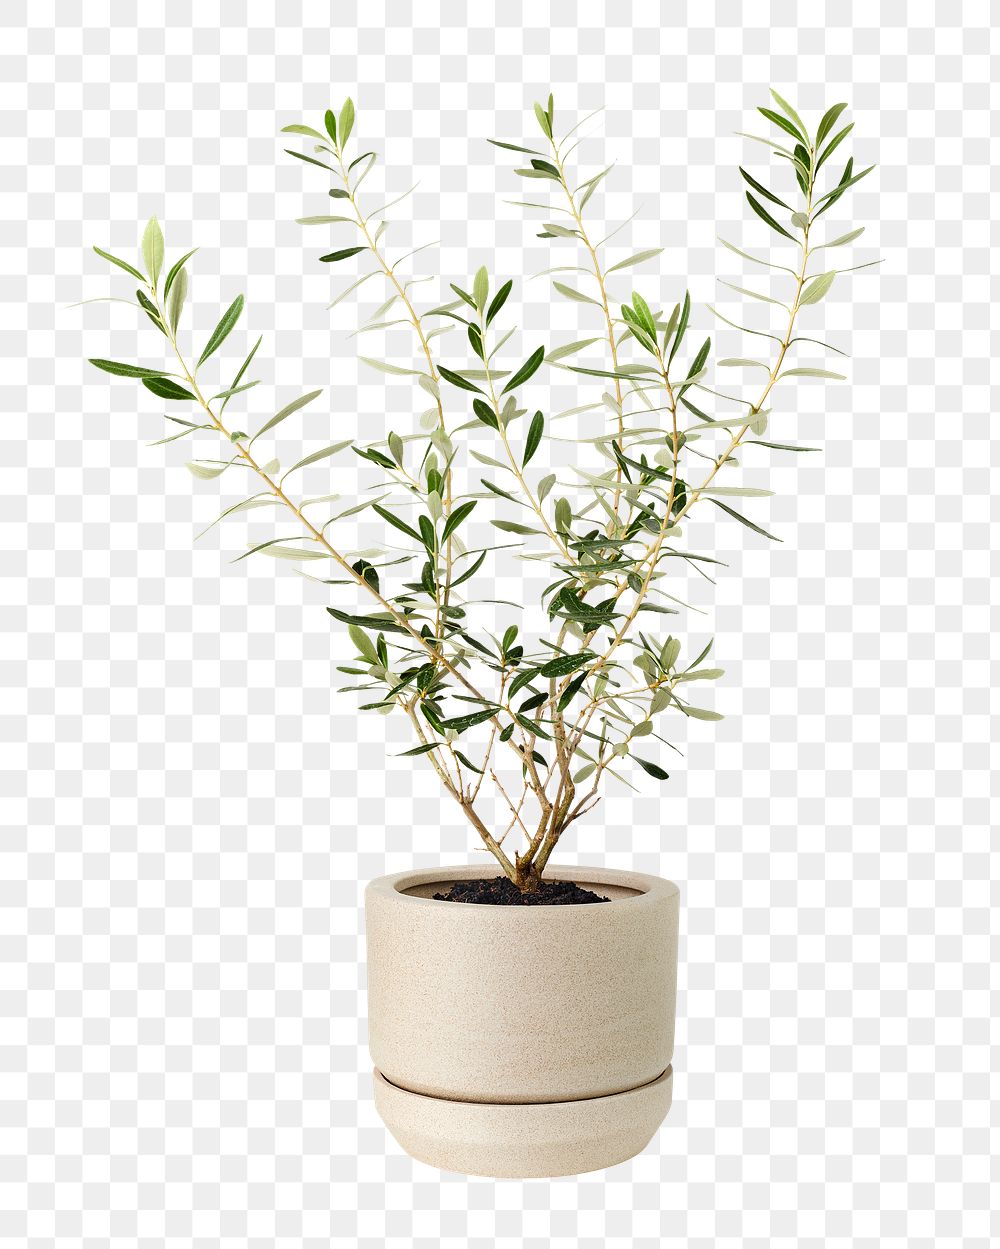 Olive plant png mockup in a ceramic pot